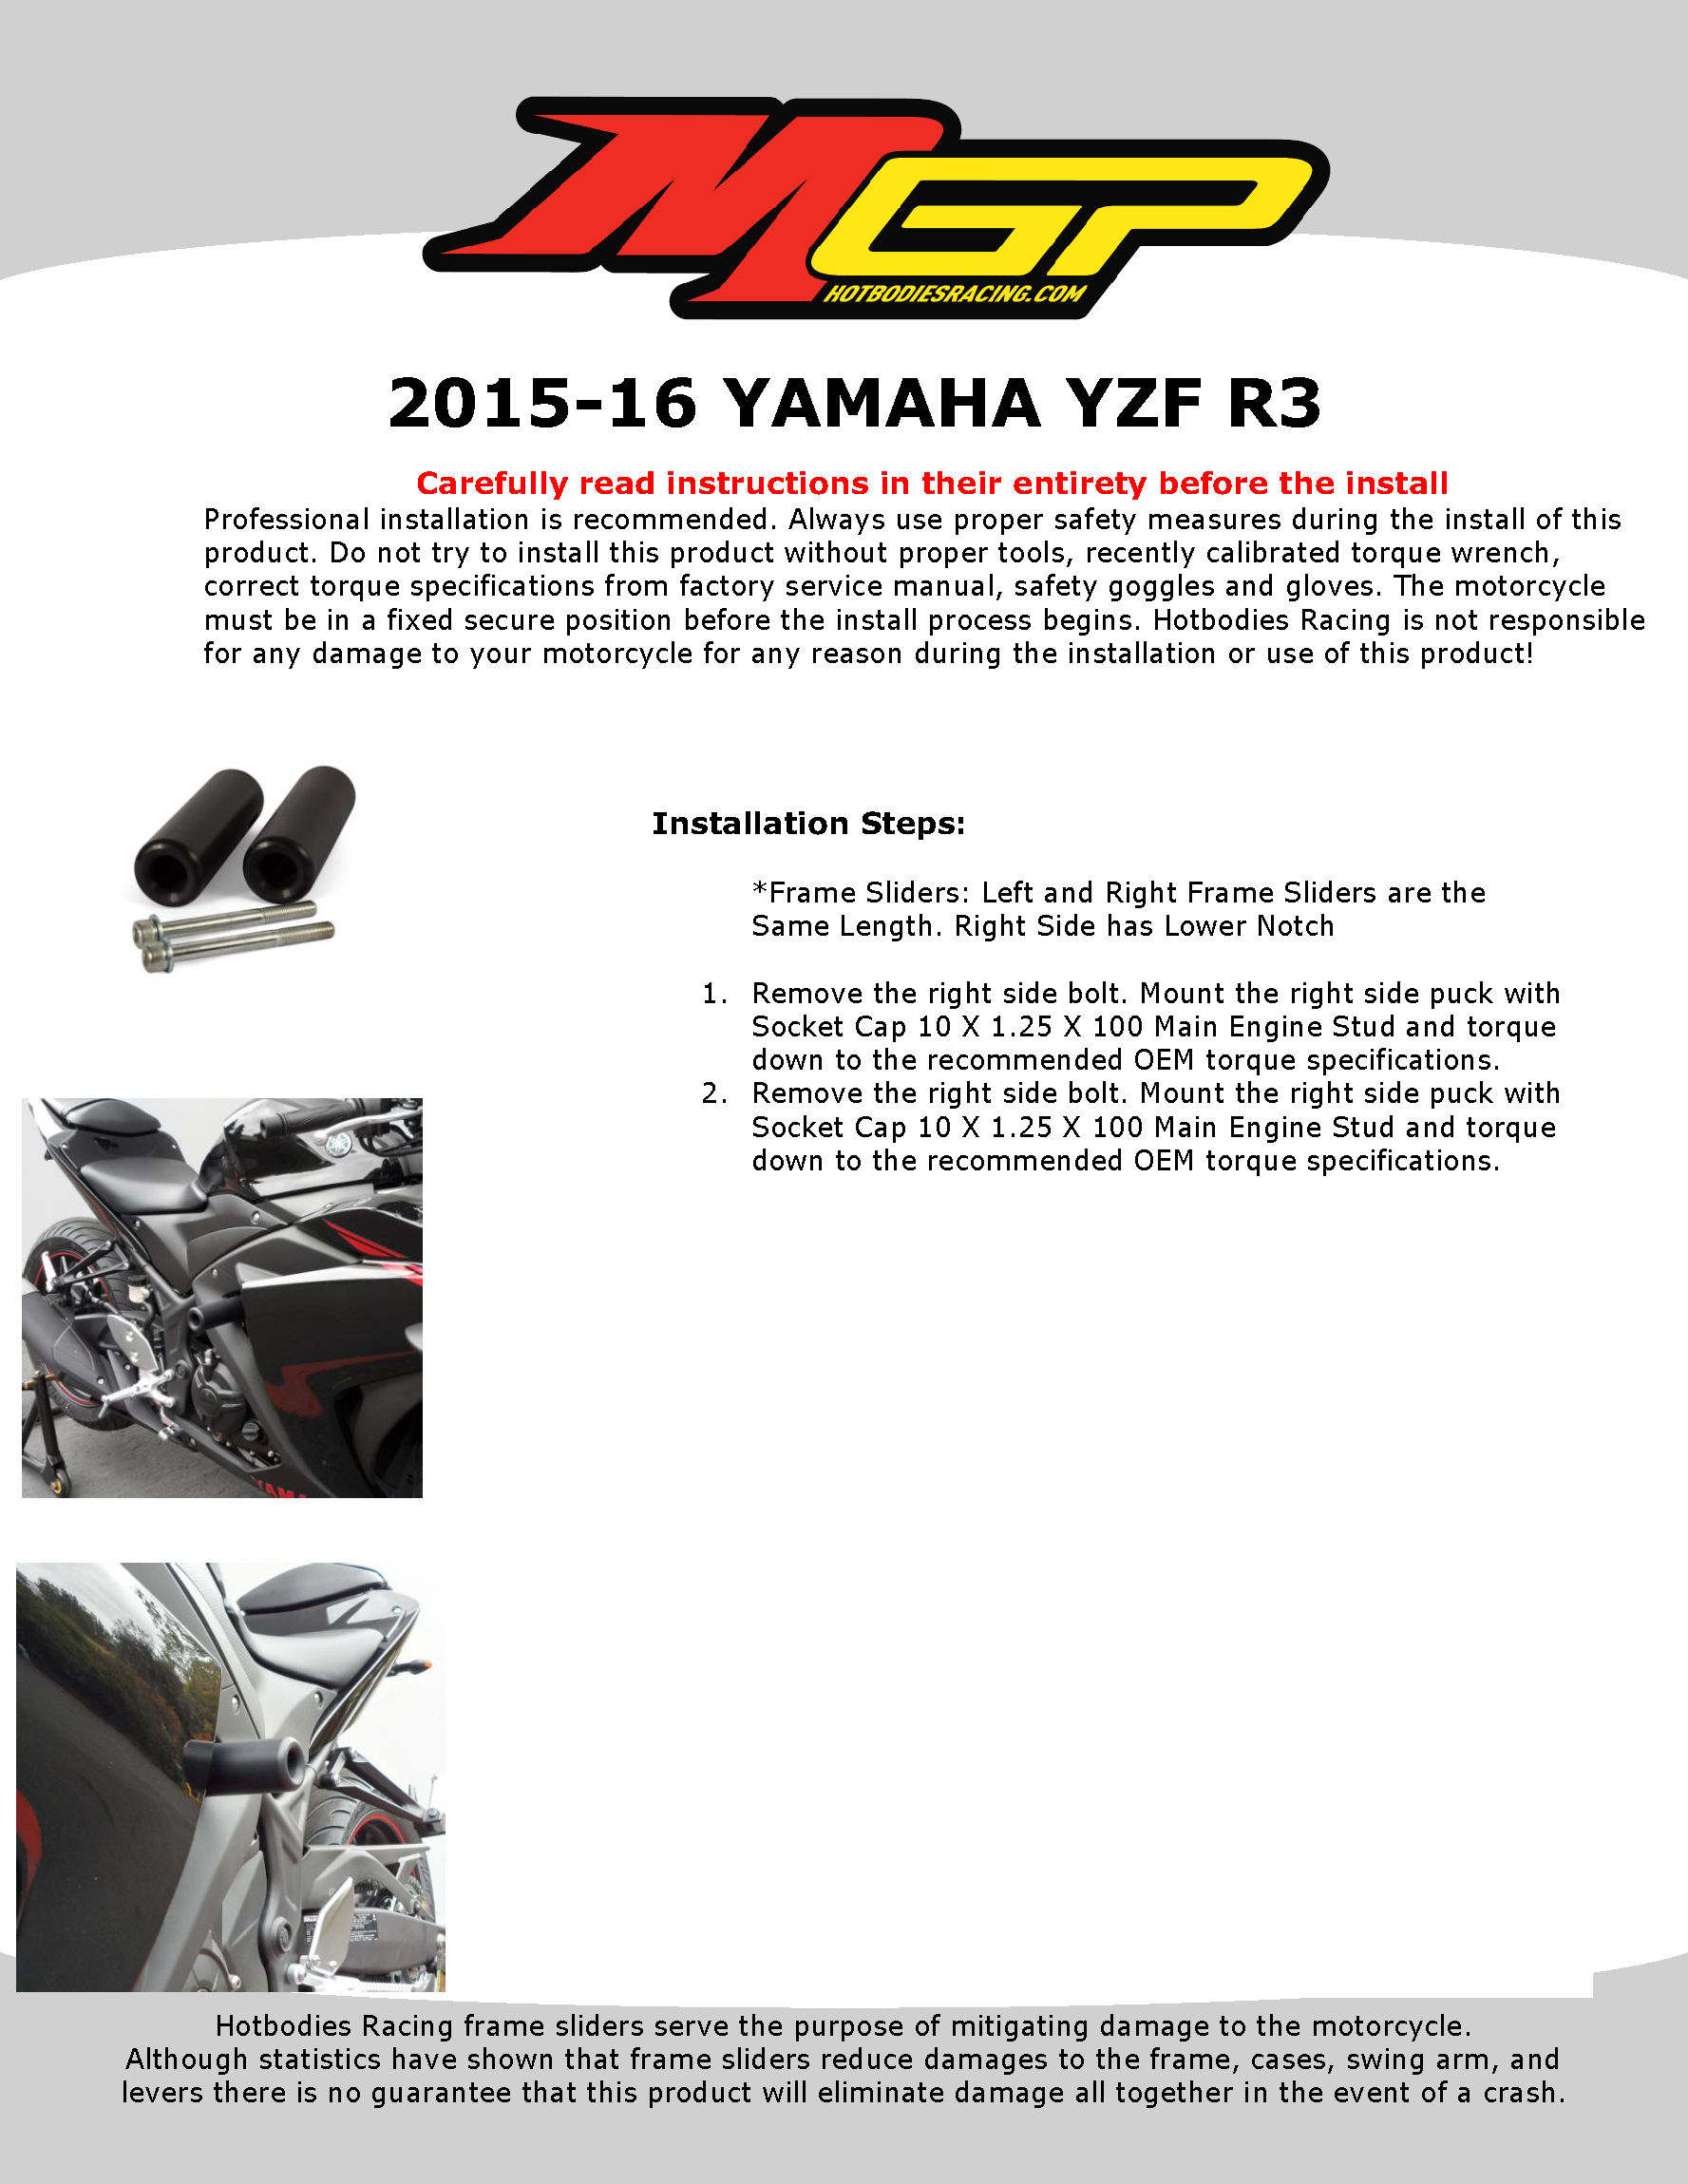 

2015-16 YAMAHA YZF R3 Frame Slider Installation

